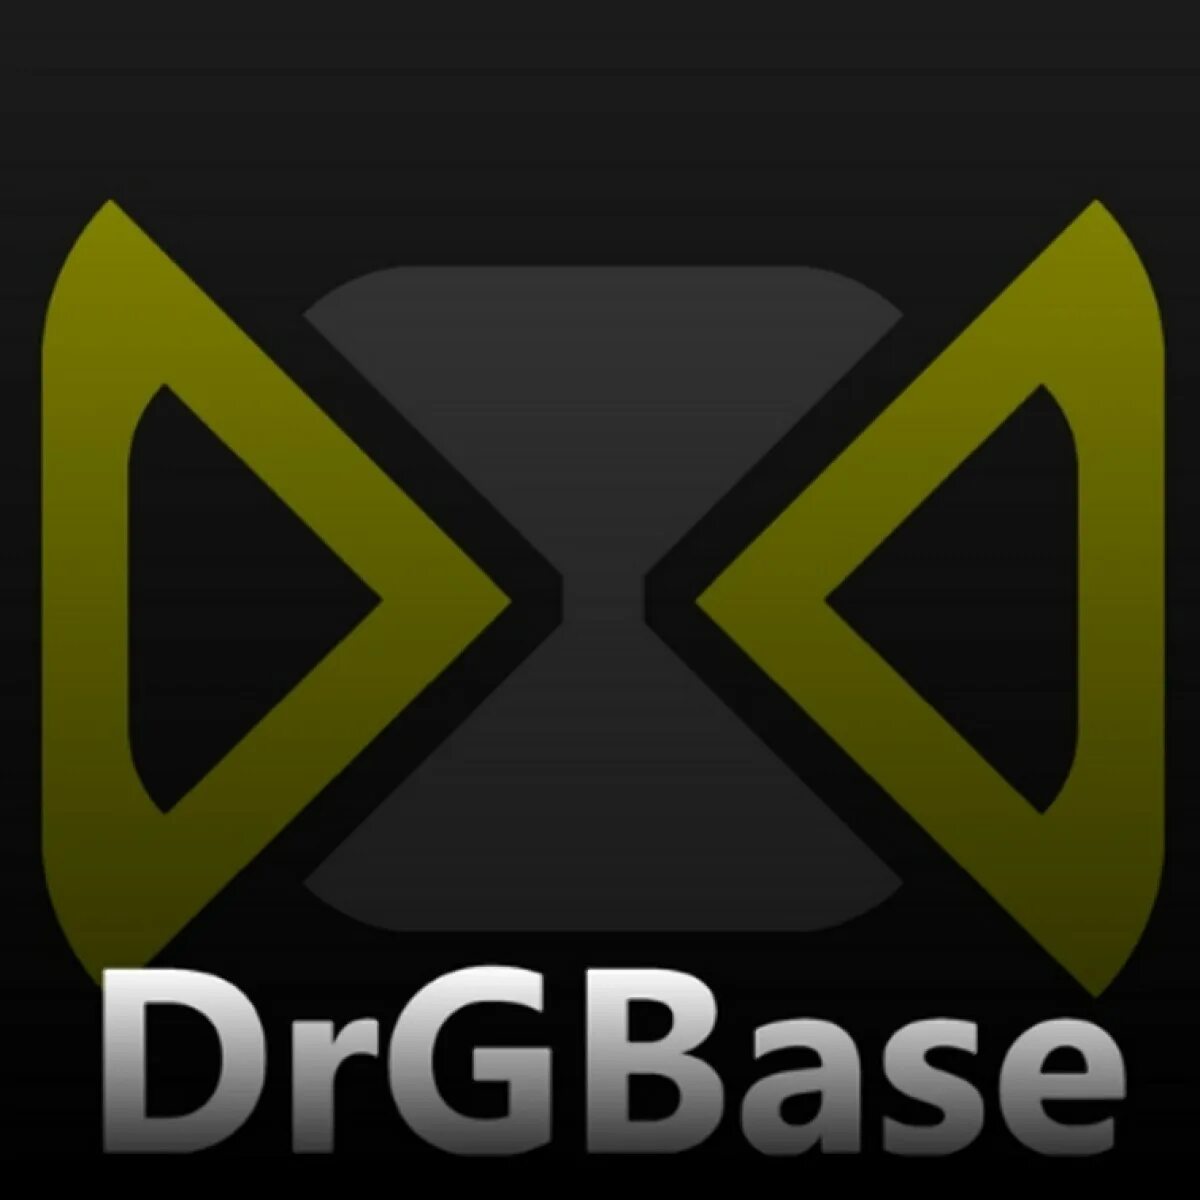 Garry s Mod drgbase Nextbot Base. Drgbase | Nextbot Base. Что такое drgbase в Гаррис мод. Изображение для Nextbot.